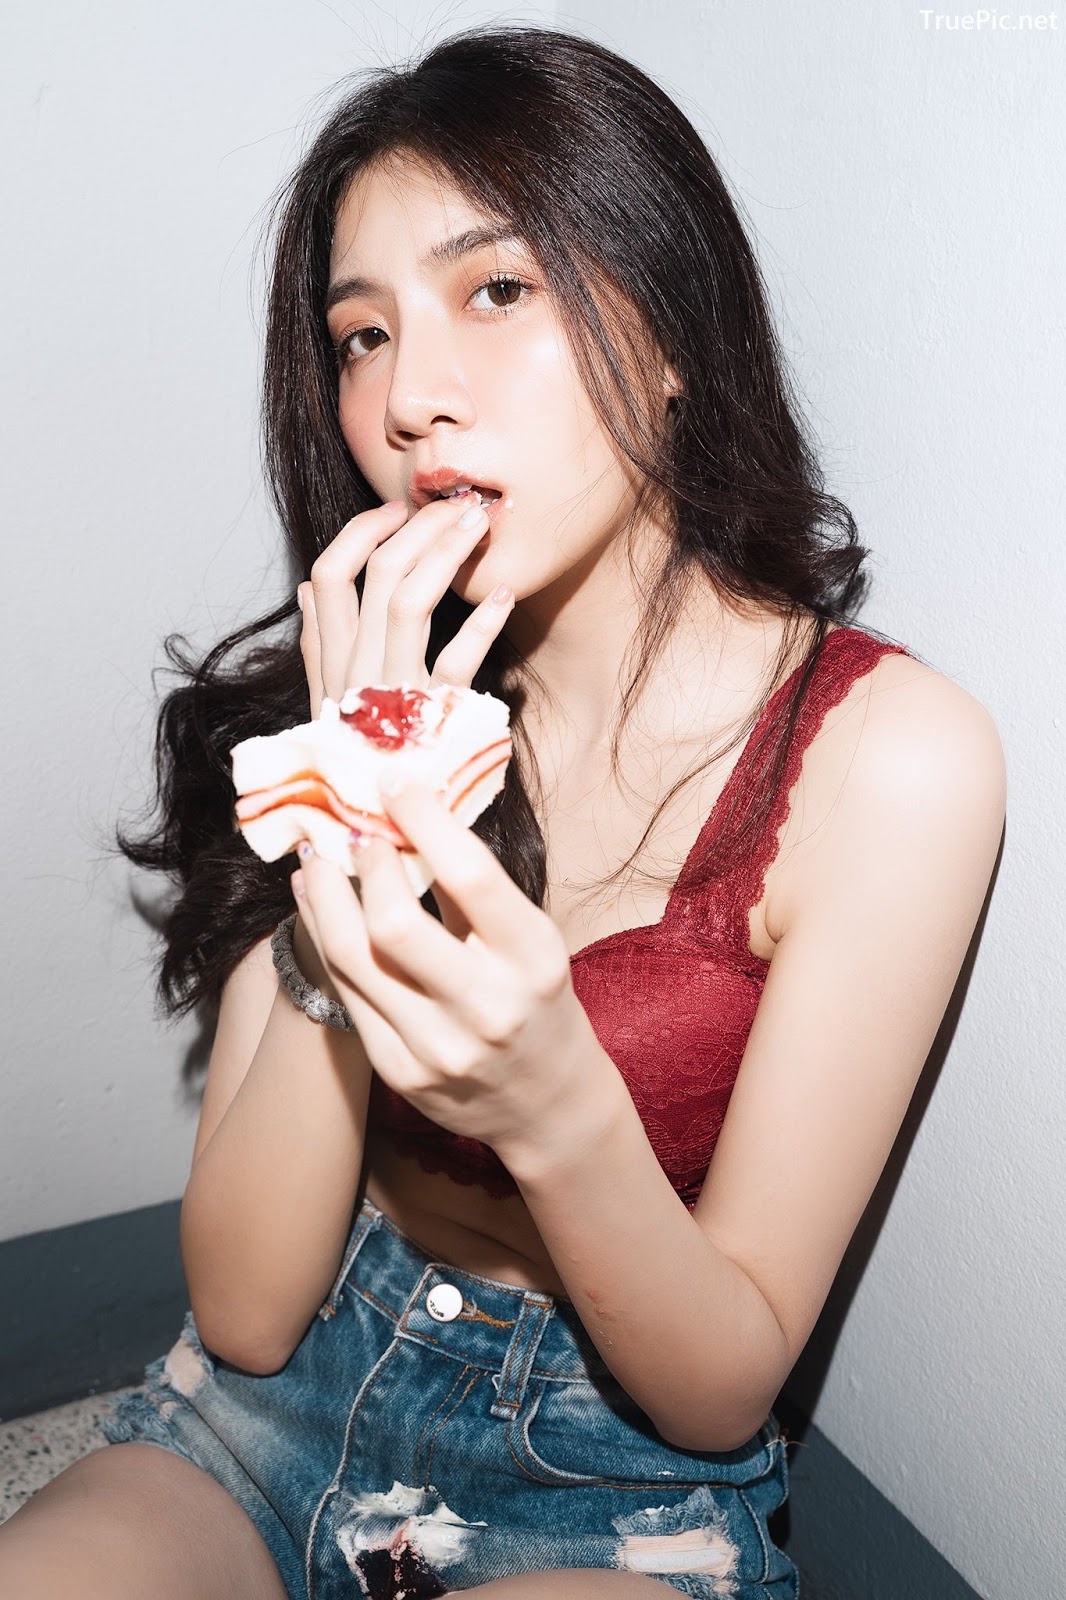 Image Thailand Model - Sasi Ngiunwan - Strawberry Cake - TruePic.net - Picture-6